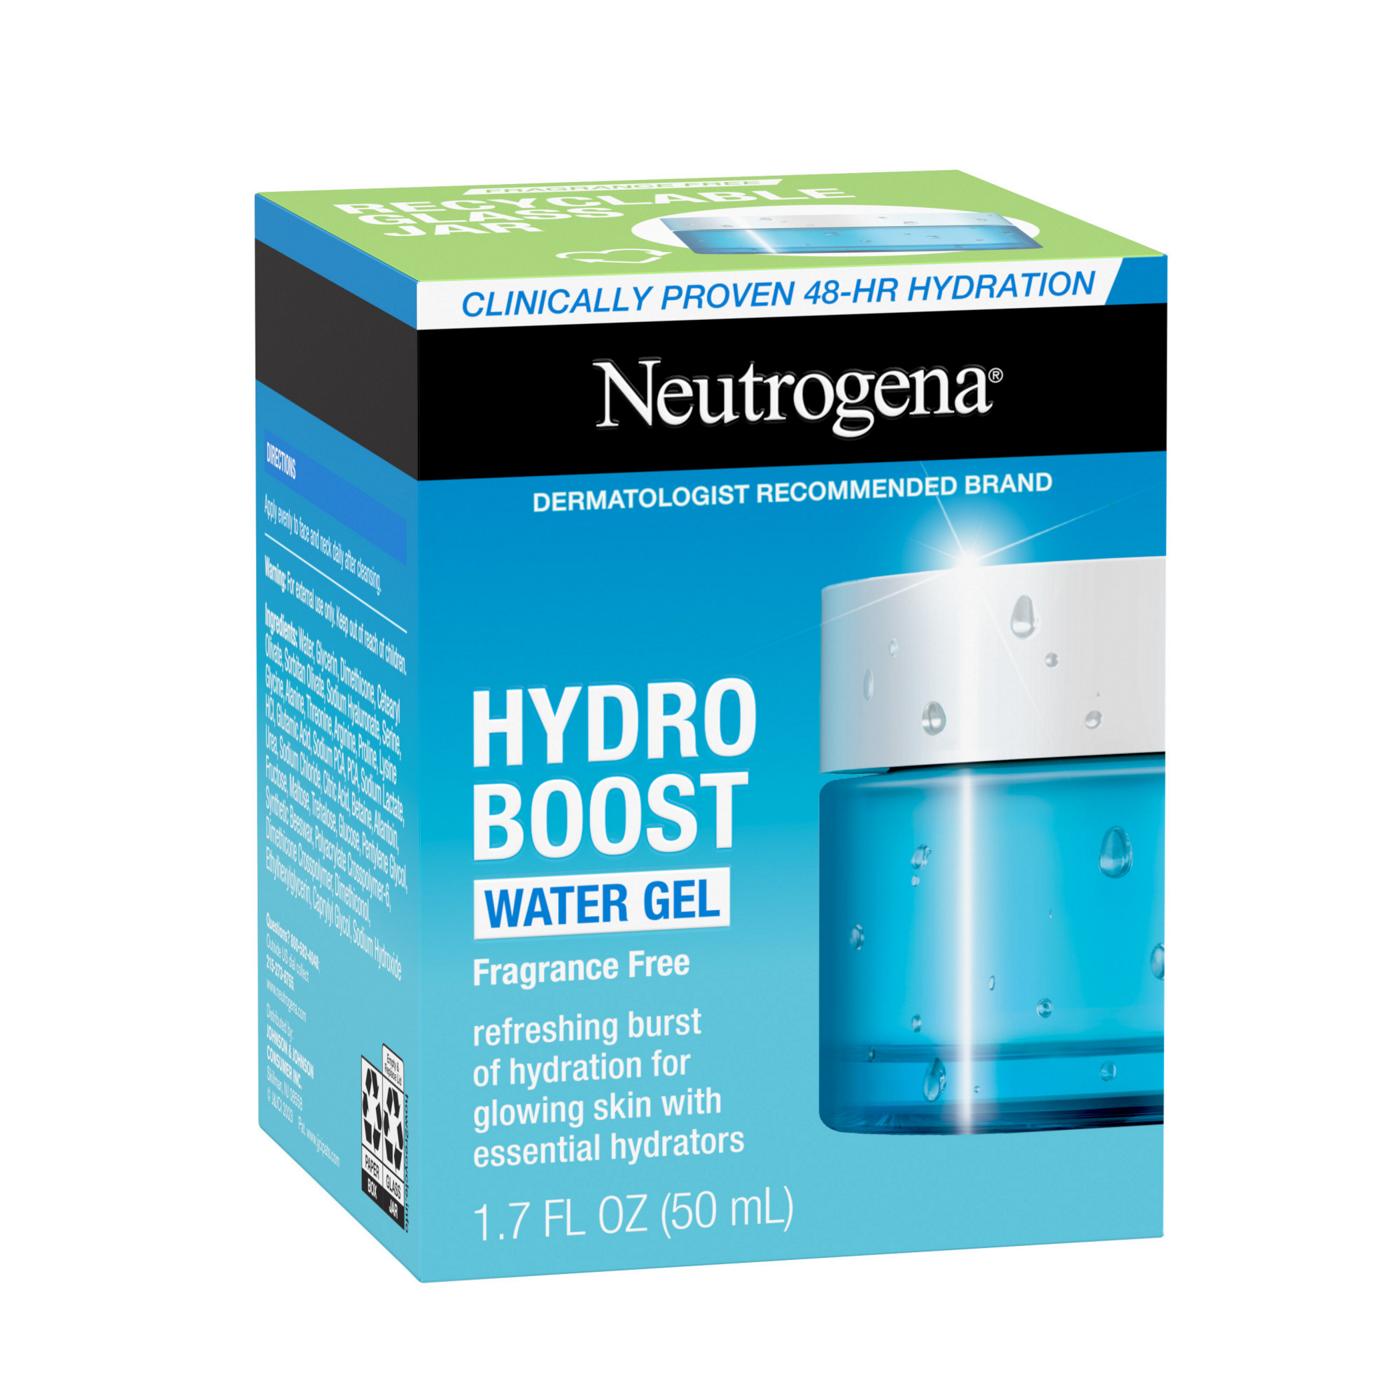 Neutrogena Hydro Boost Water Gel; image 6 of 8